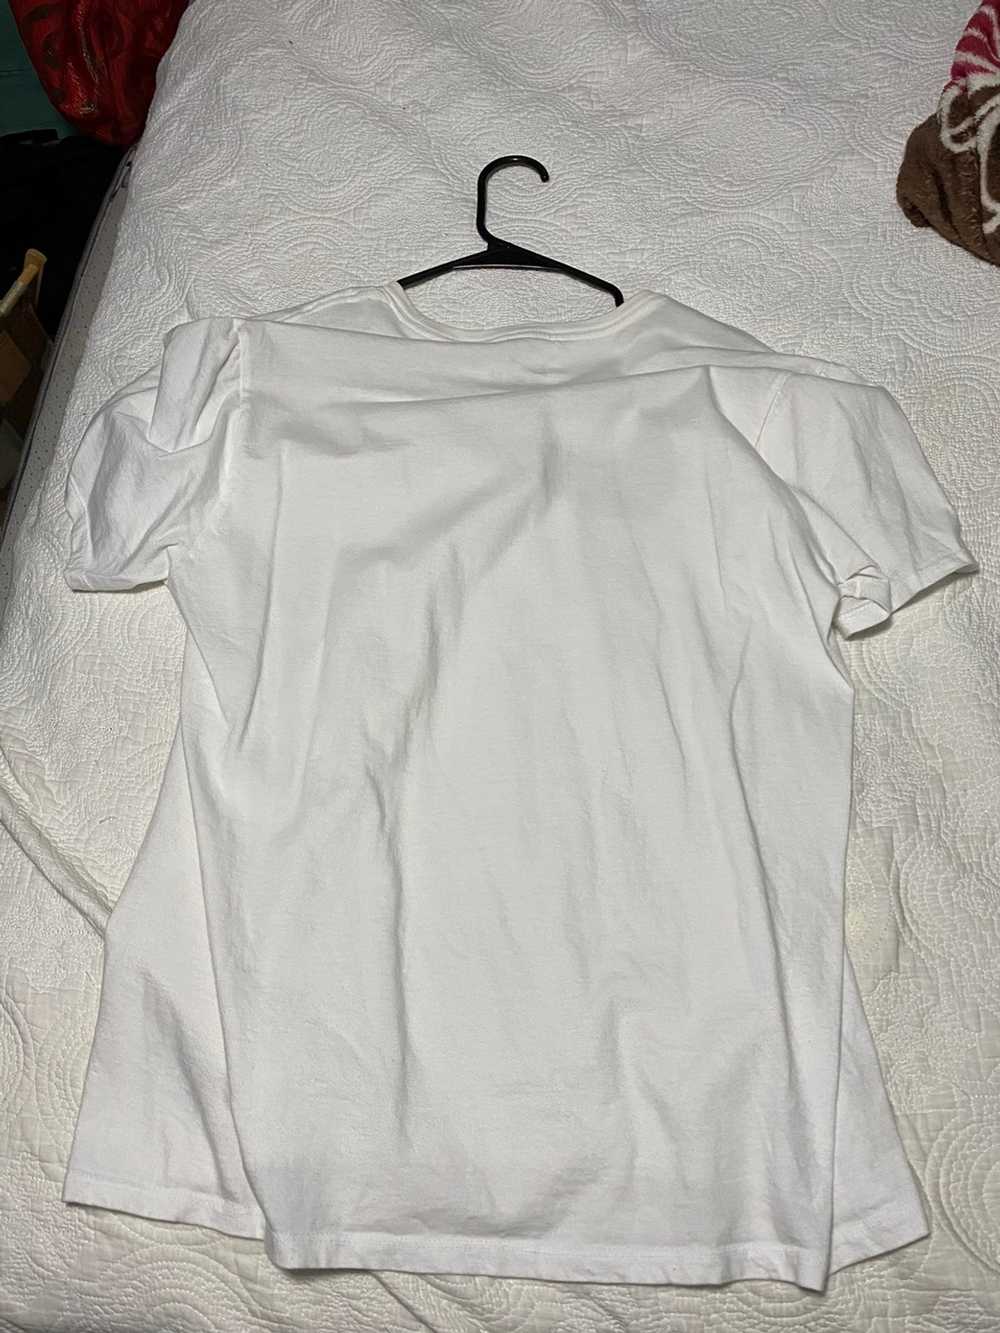 Nike Nike Swoosh T Shirt - image 3